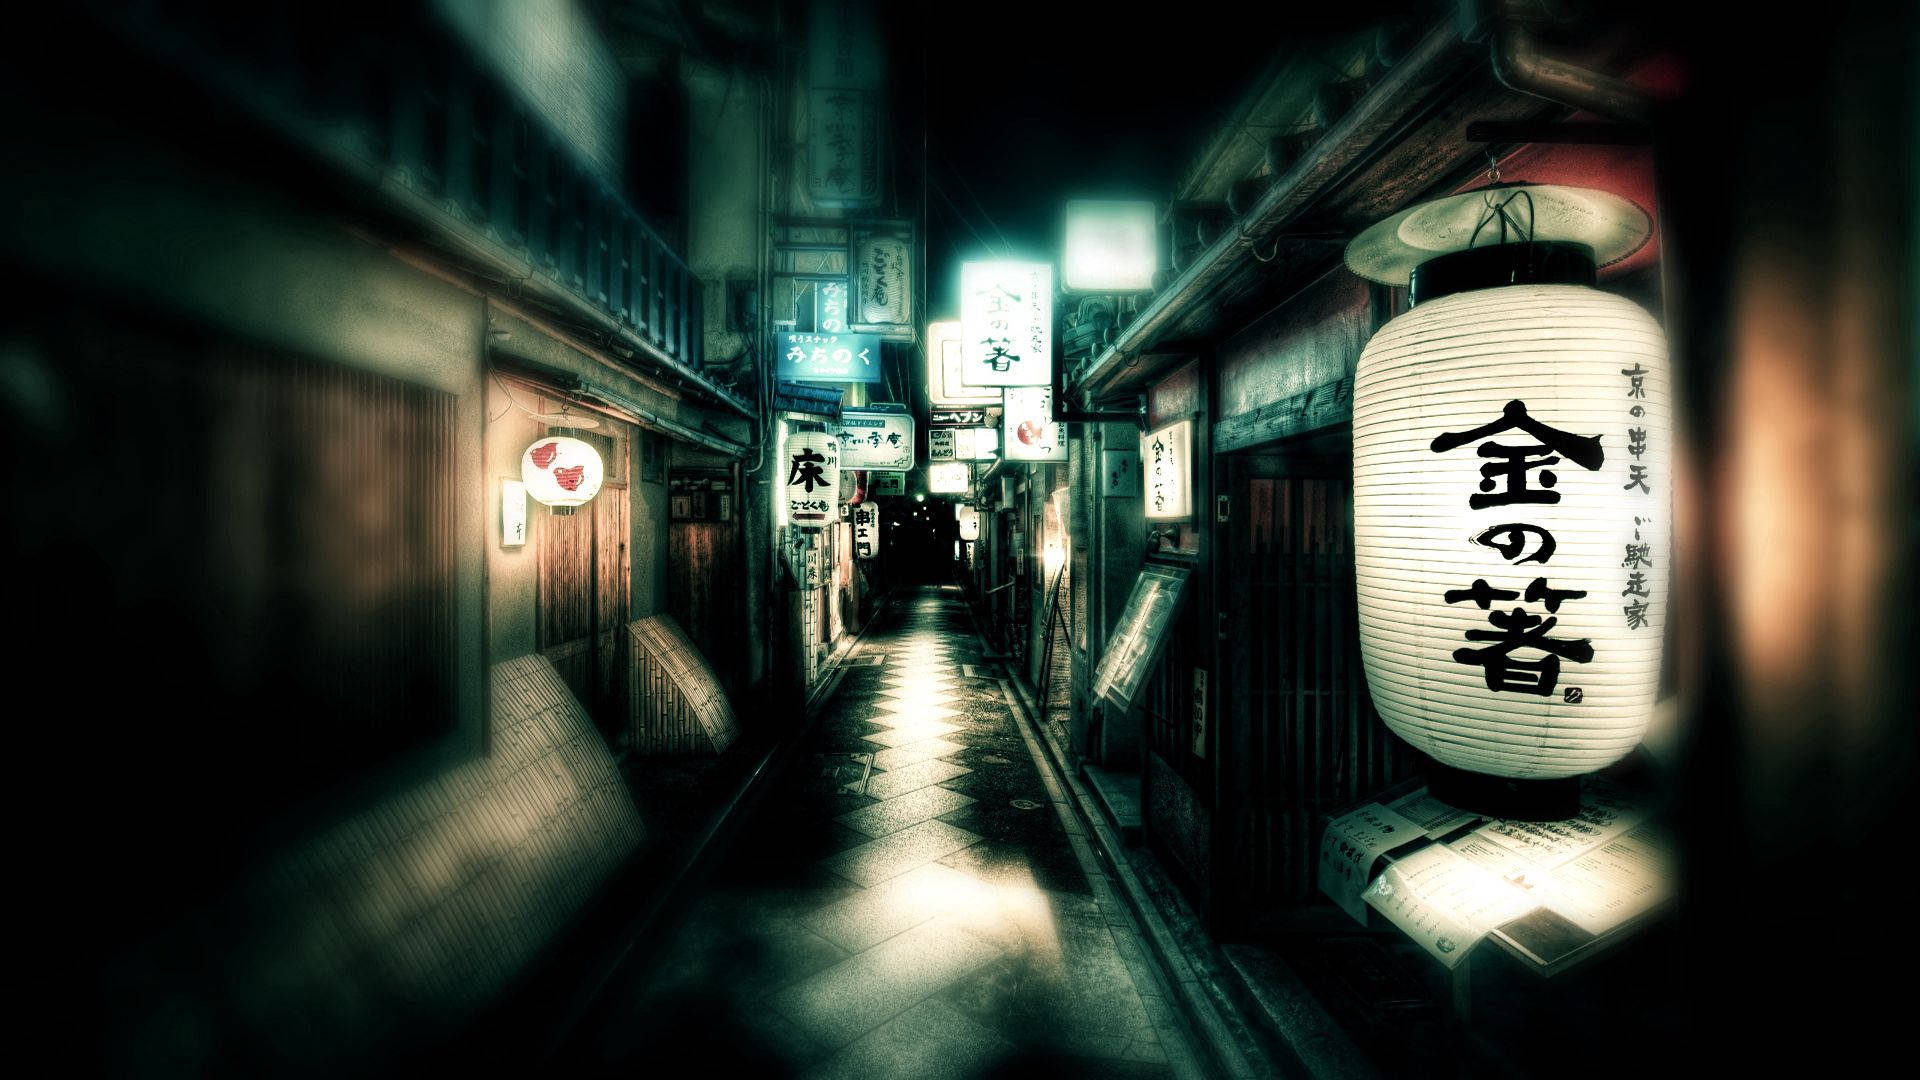 Japan at Night | A traditional street lantern lights up the way Wallpaper